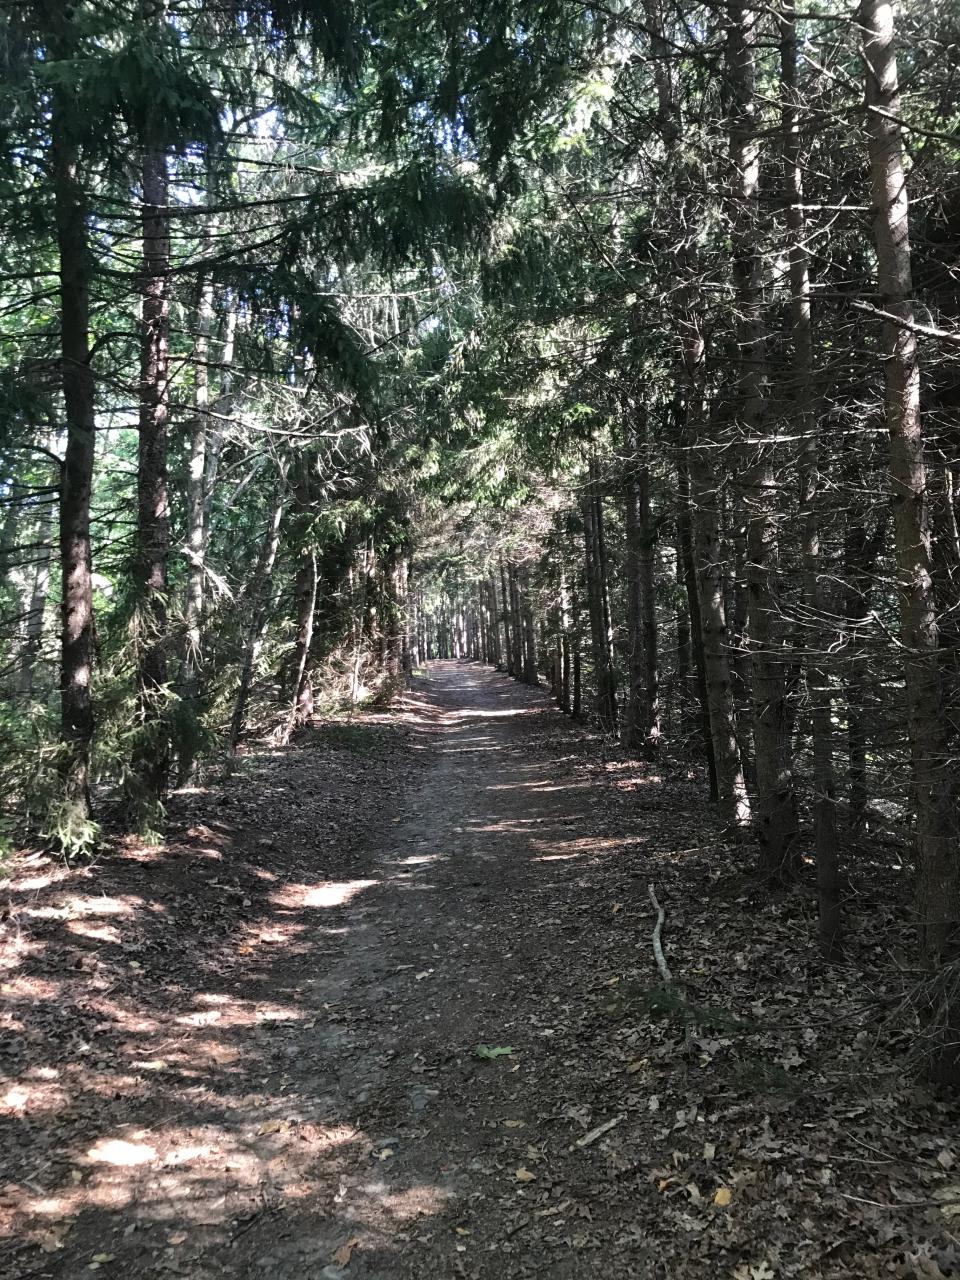 The white-blazed Pettaquamscutt Trail runs north under towering Norwegian spruce trees.